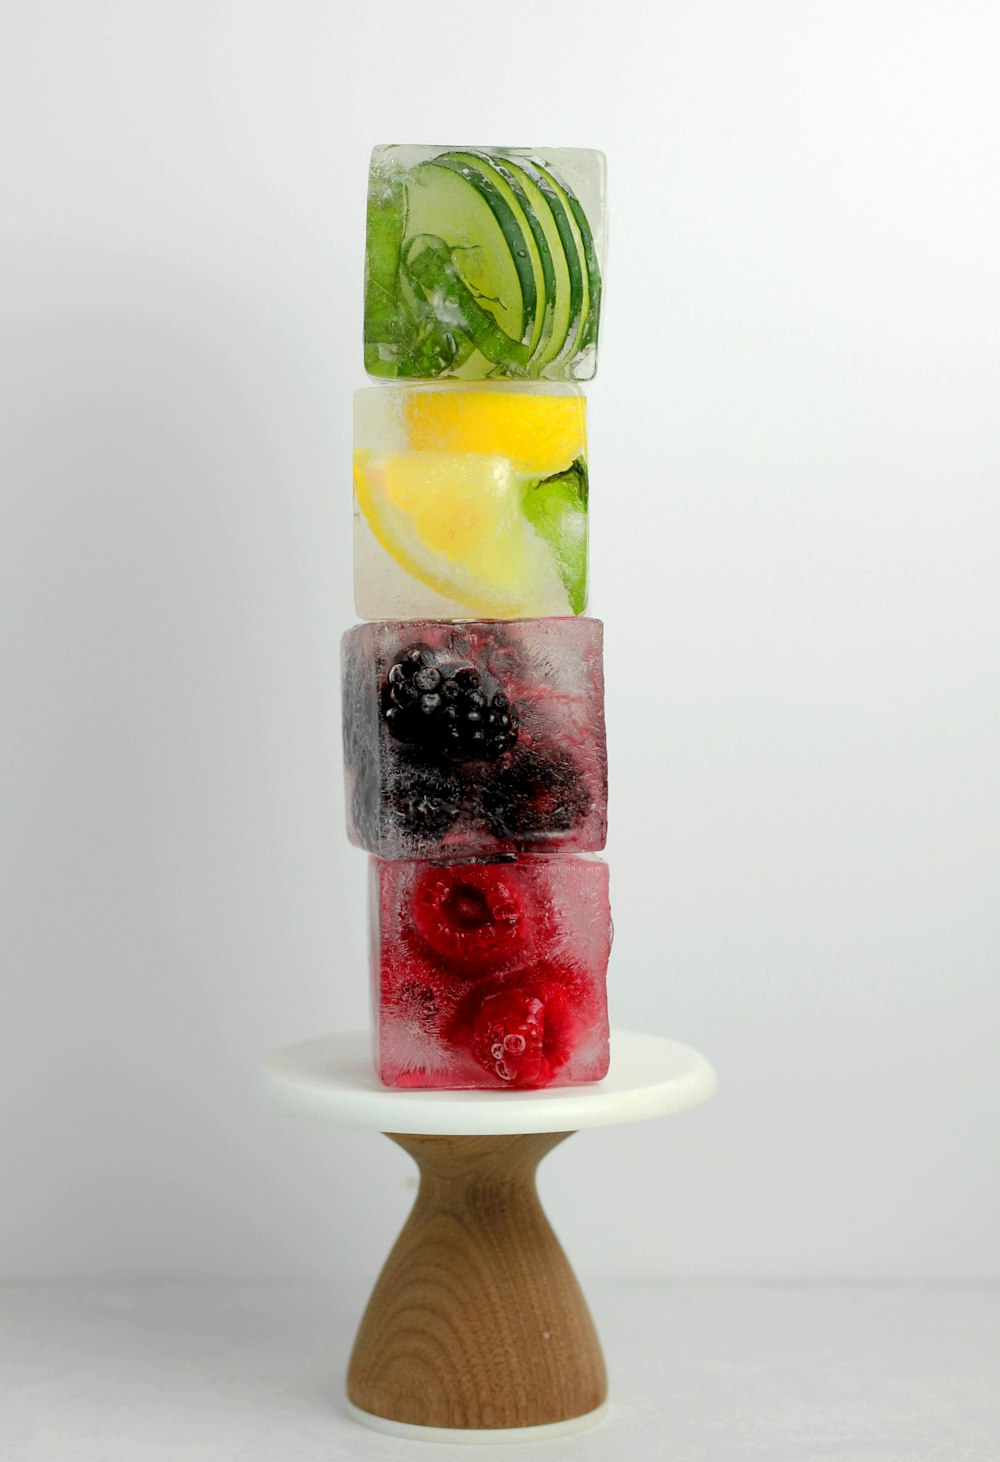 cubos de gelo empilhados de diferentes sabores